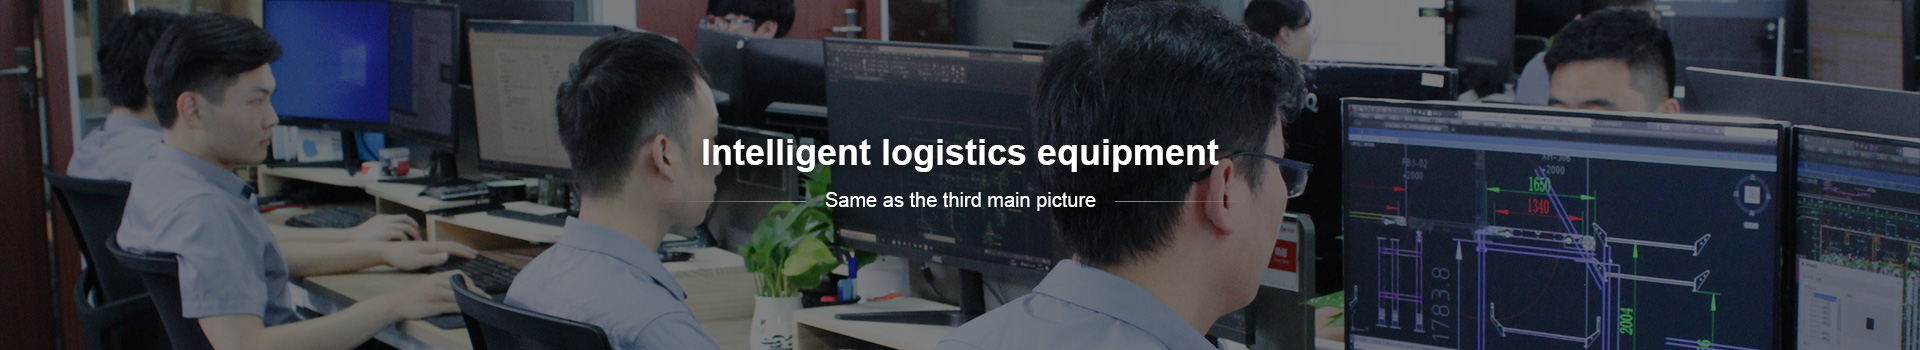 Intelligent logistics equipment